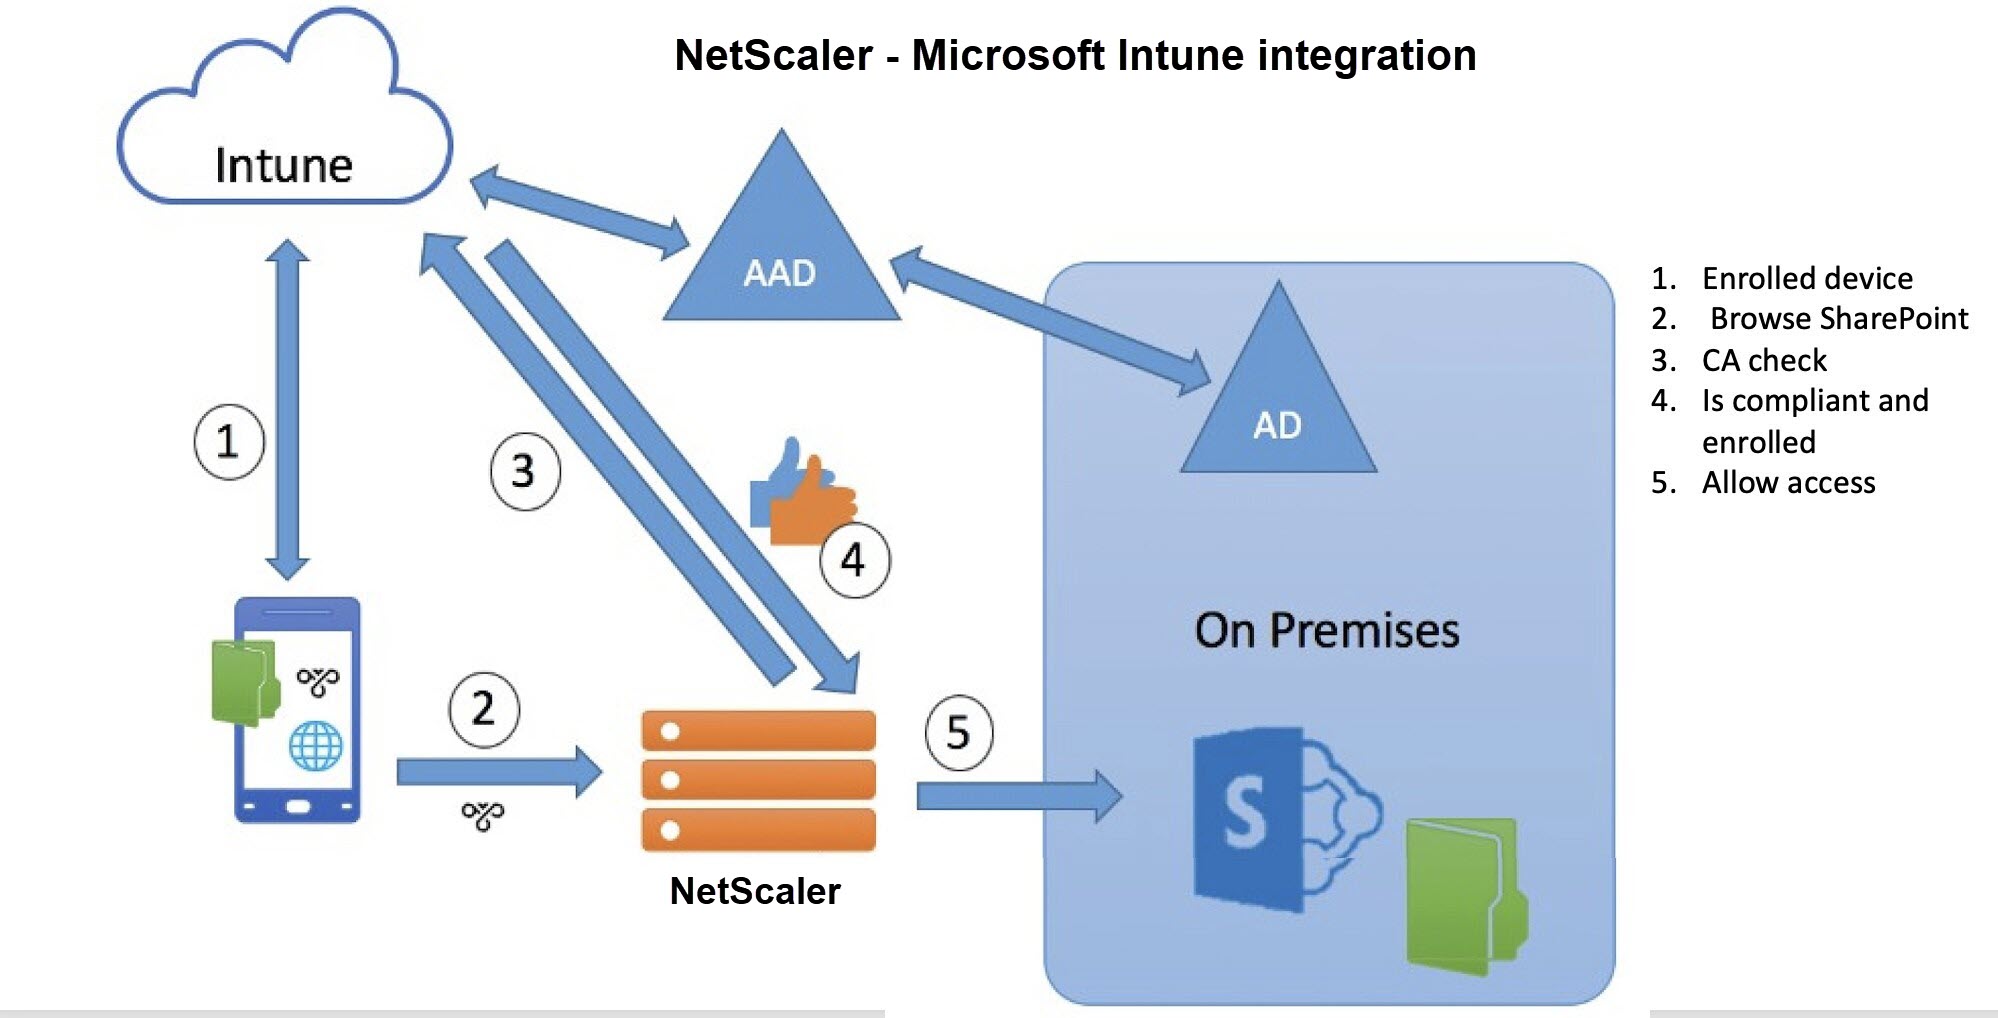 Intune and NetScaler integration